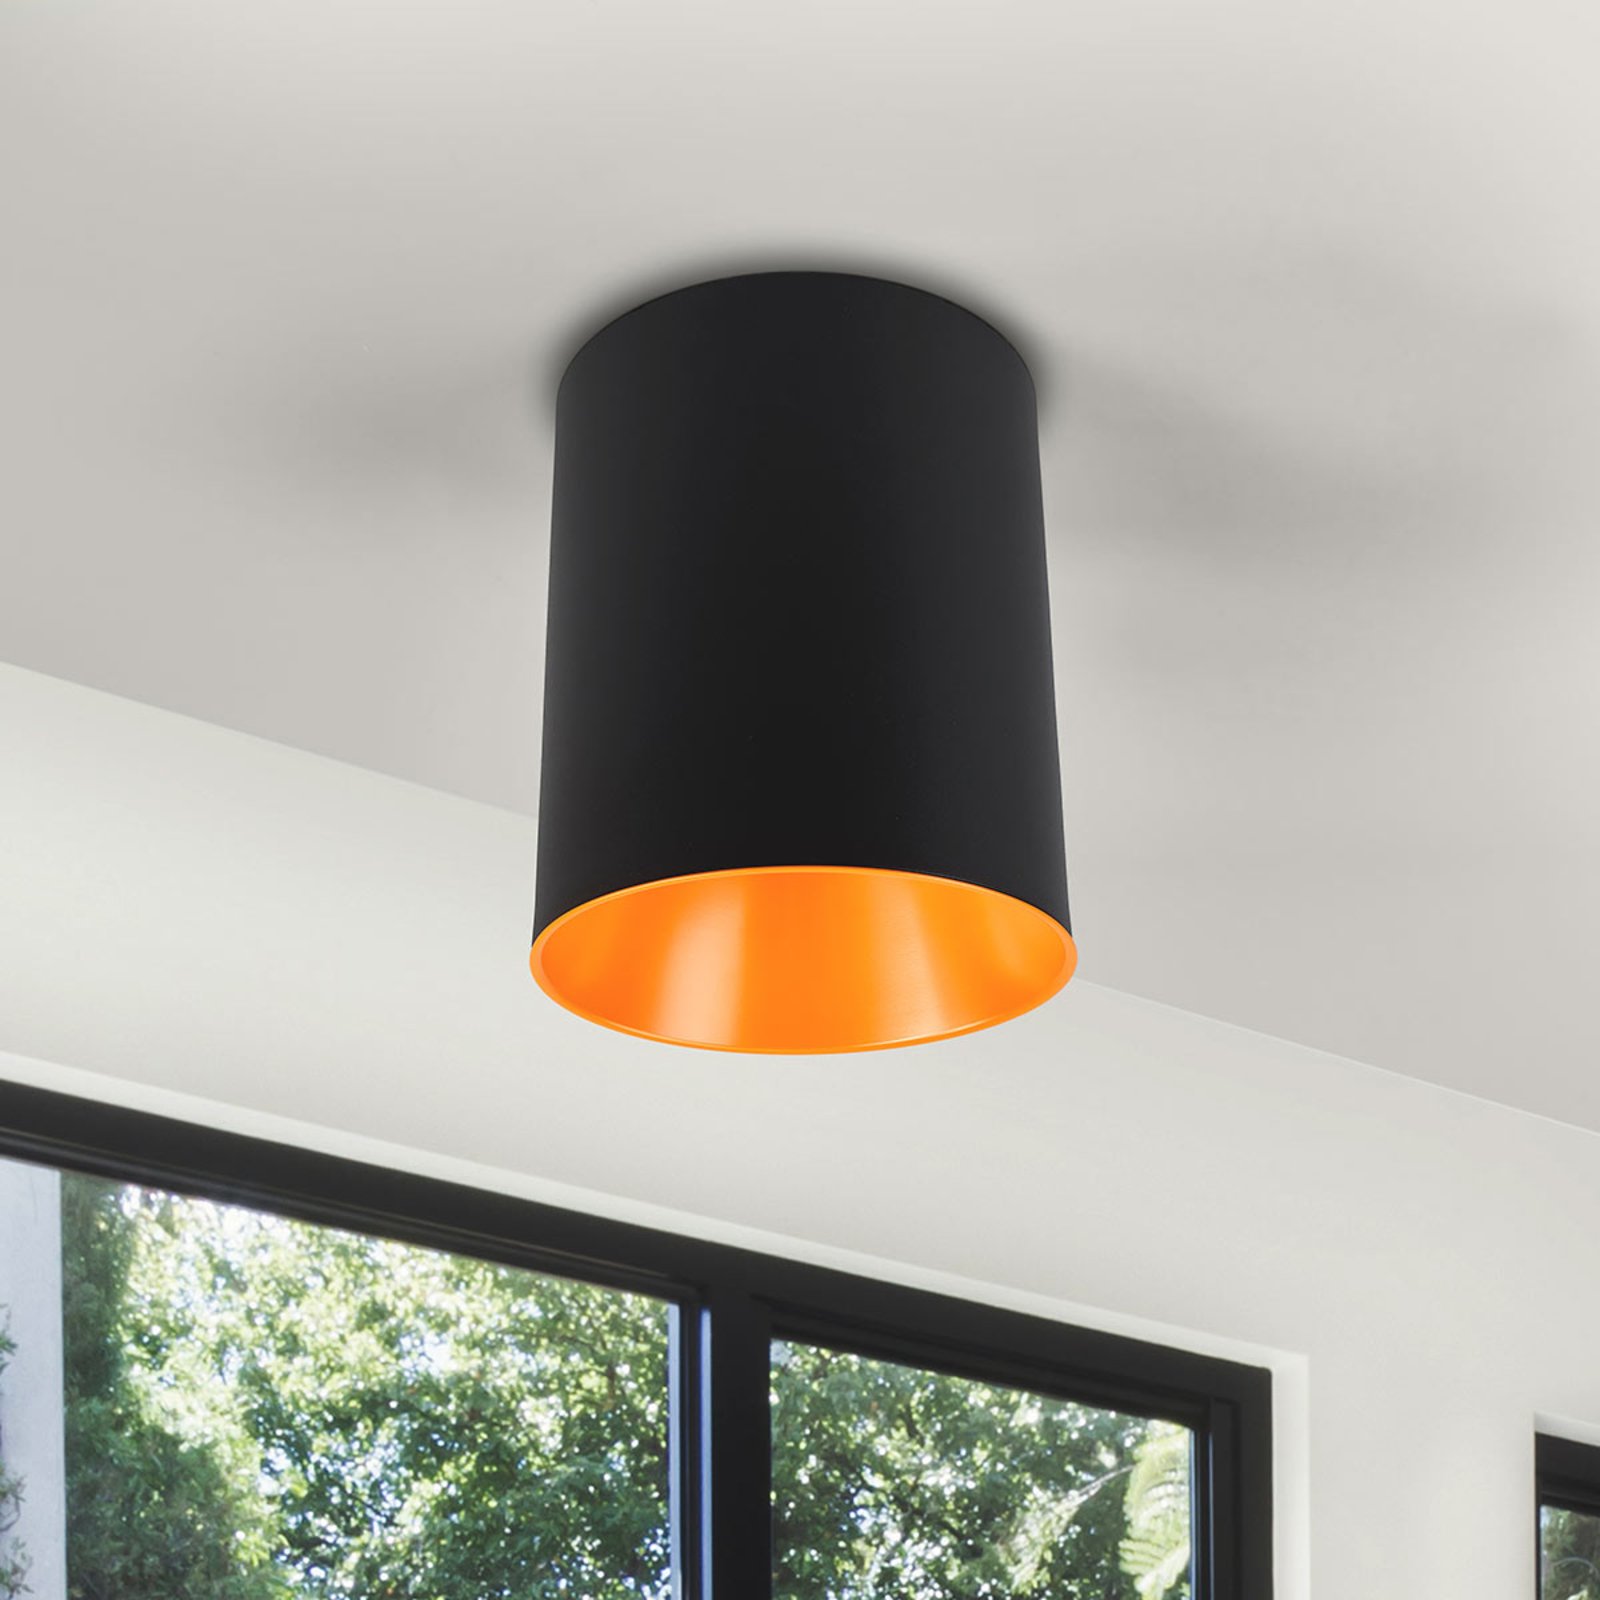 Plafonnier LED de designer Tagora cylindrique